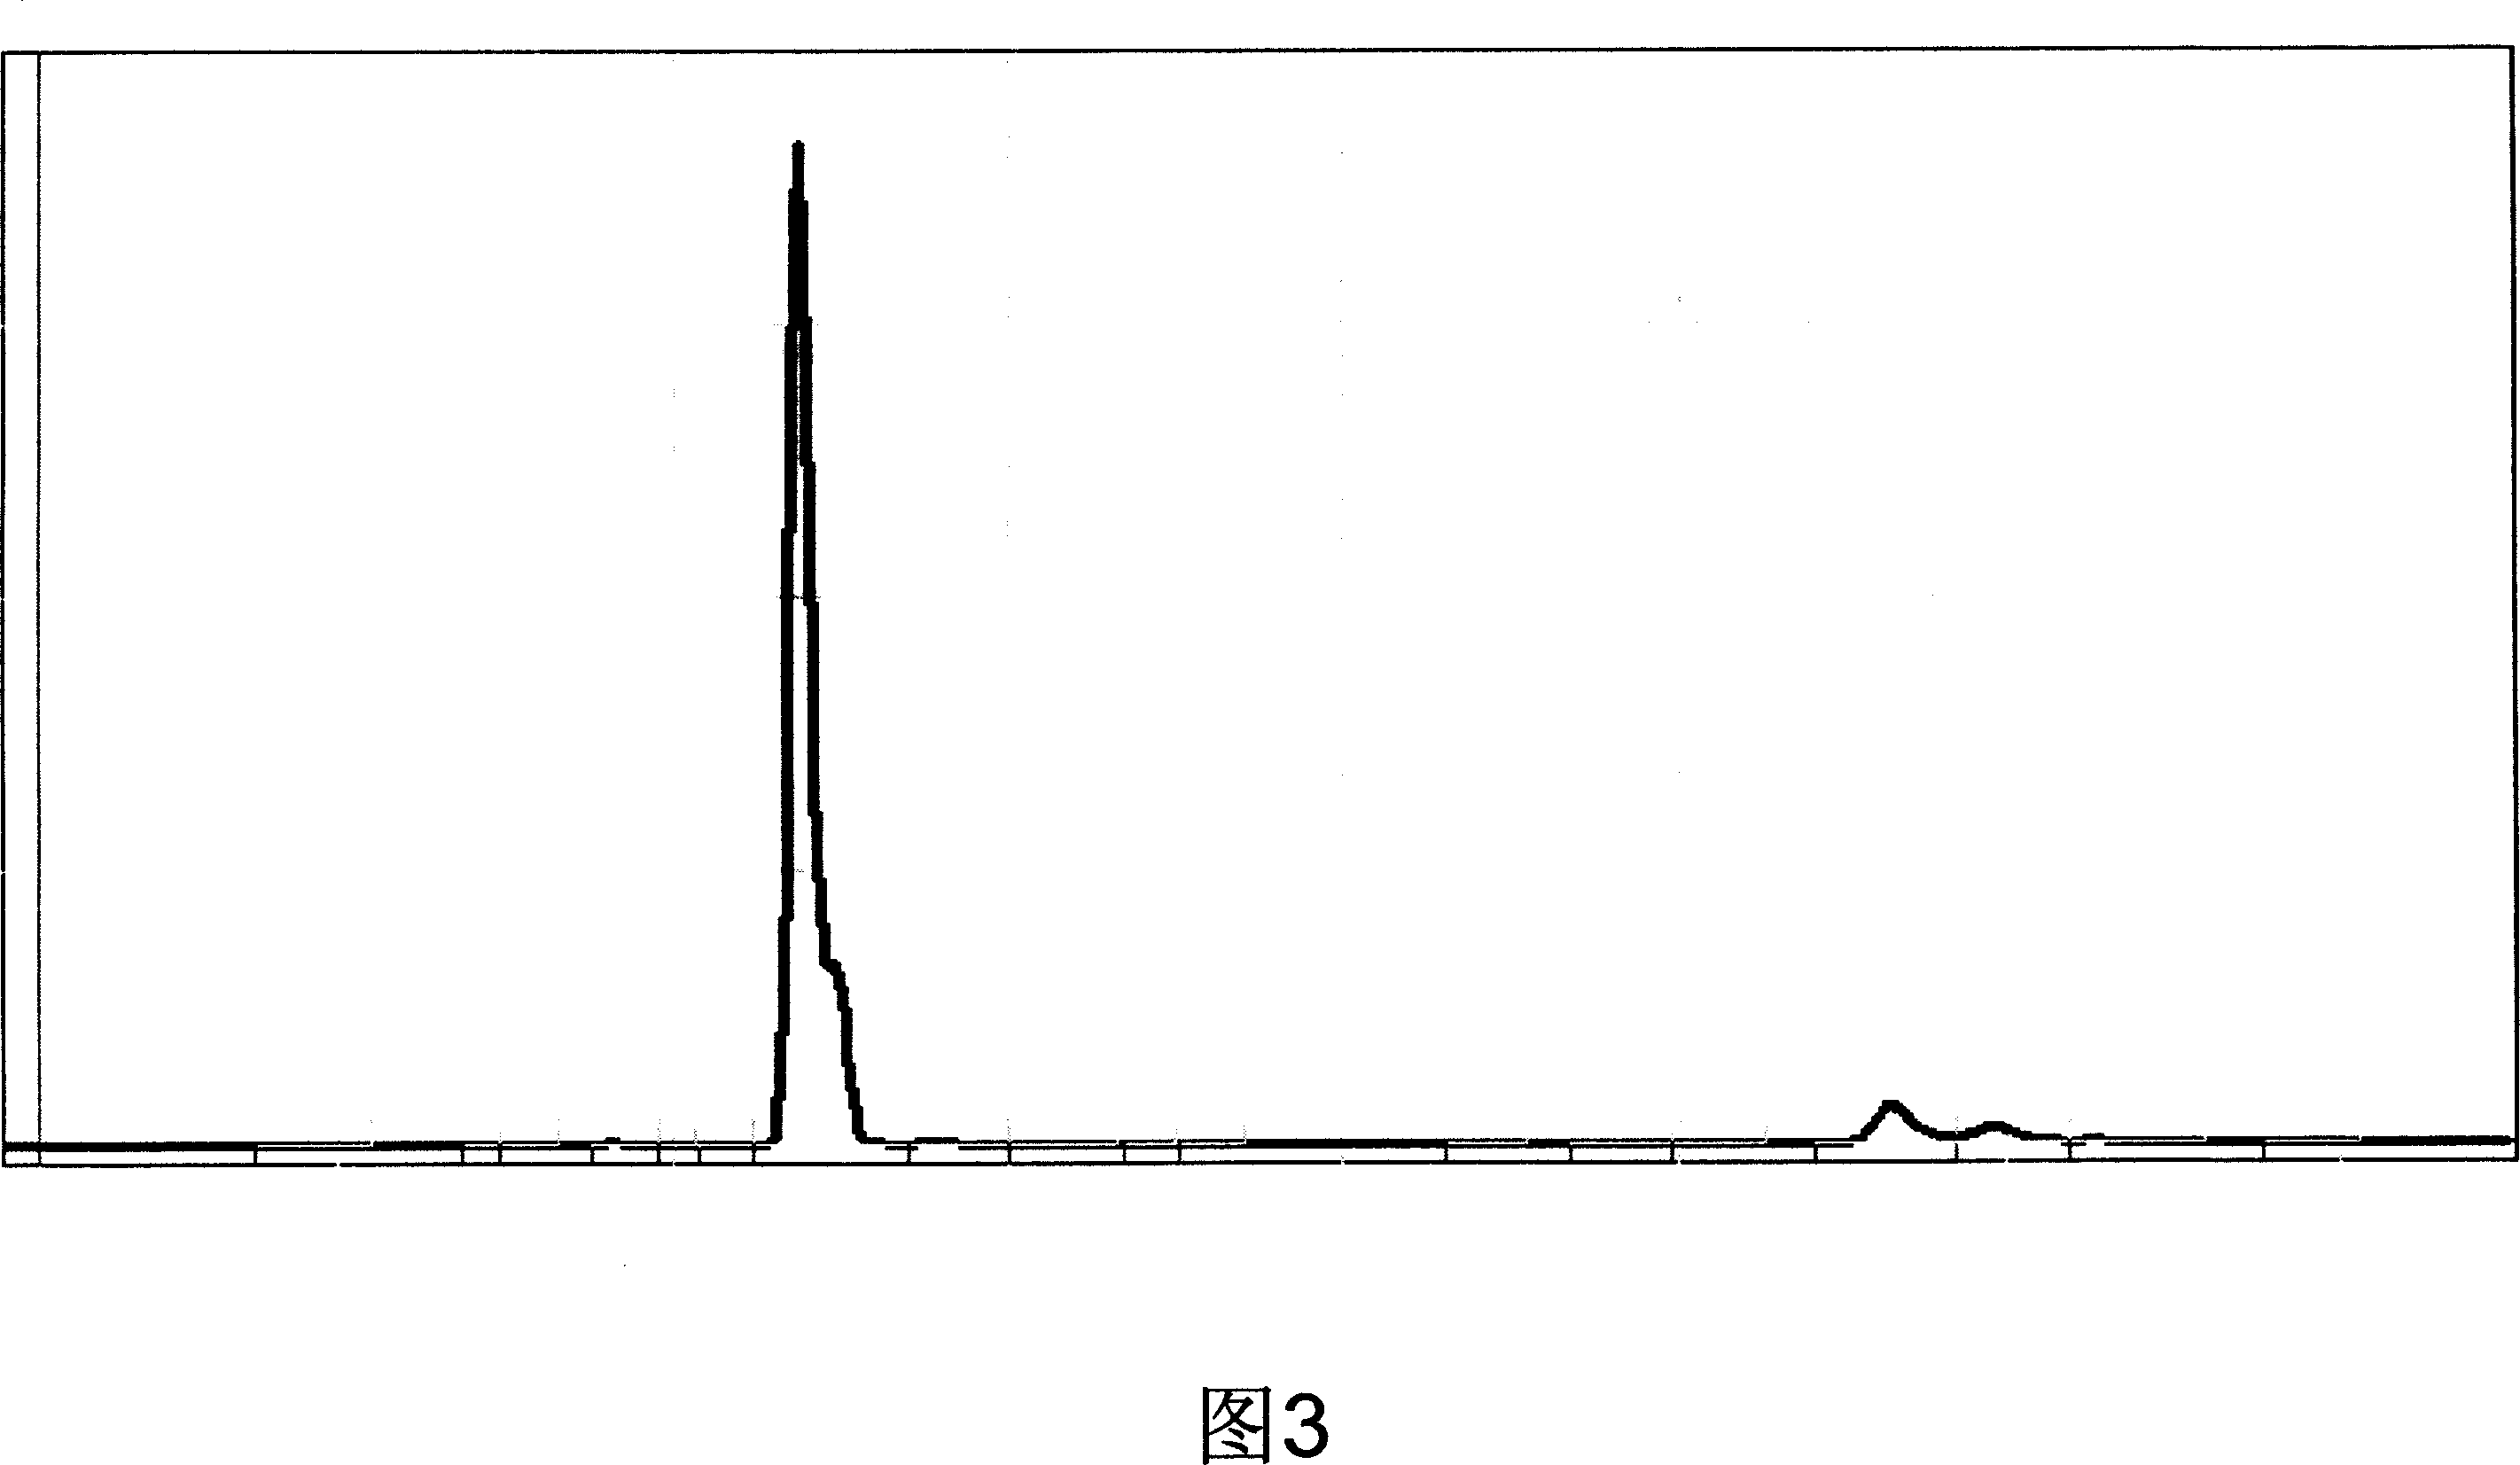 Method for measuring purity of 9-fluorenemethanol